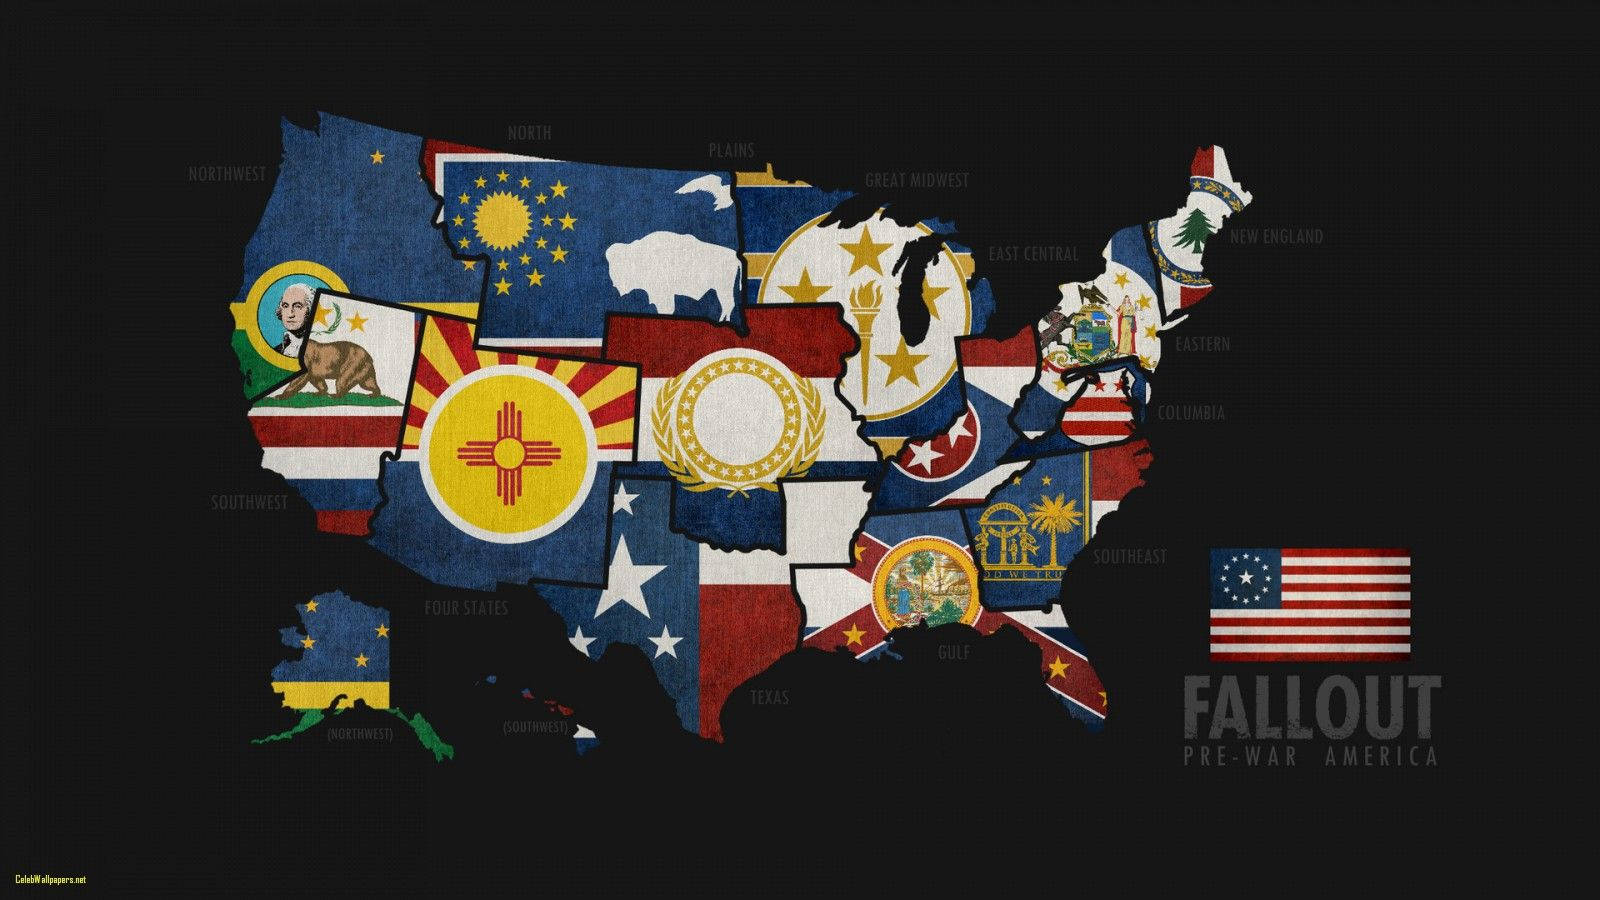 Fallout Map Of Pre-war America